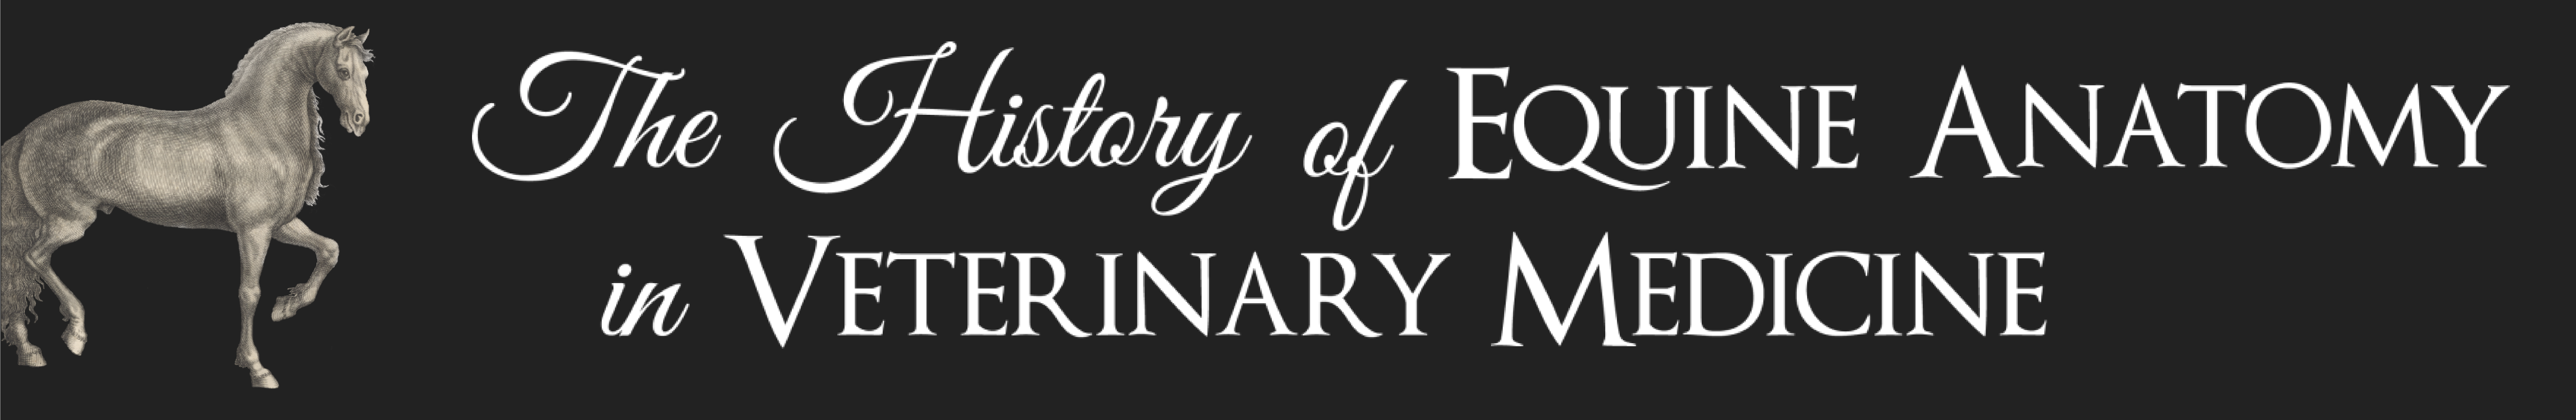 The History of Equine Anatomy in Veterinary Medicine